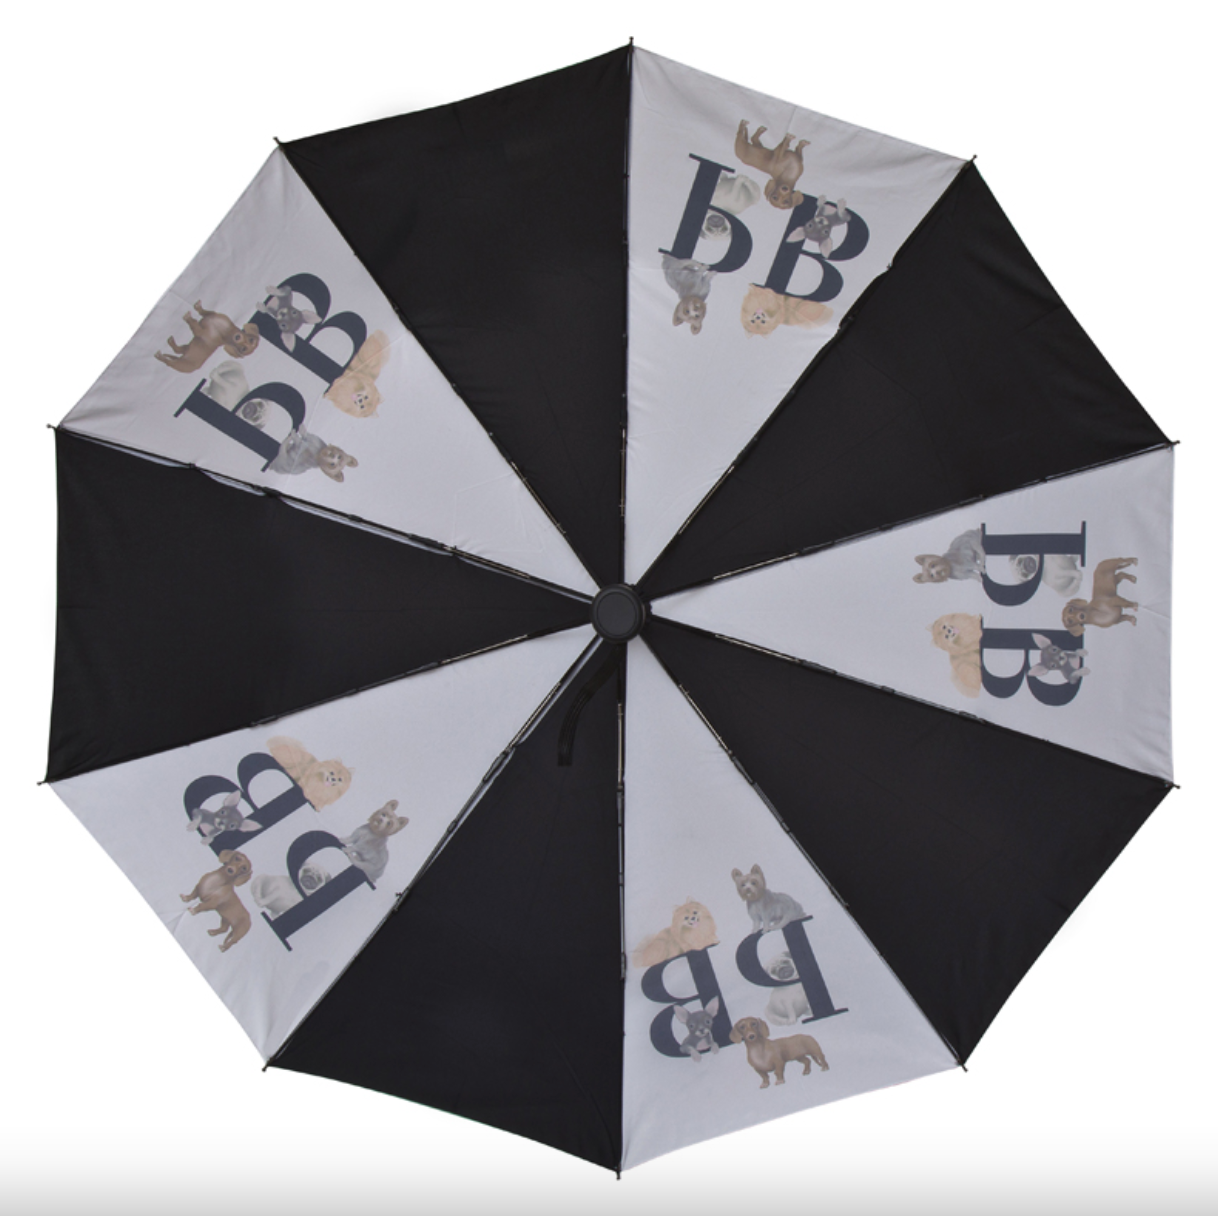 DogMania Foldable Umbrella: Stylish and Sustainable Umbrella for Dog Lovers